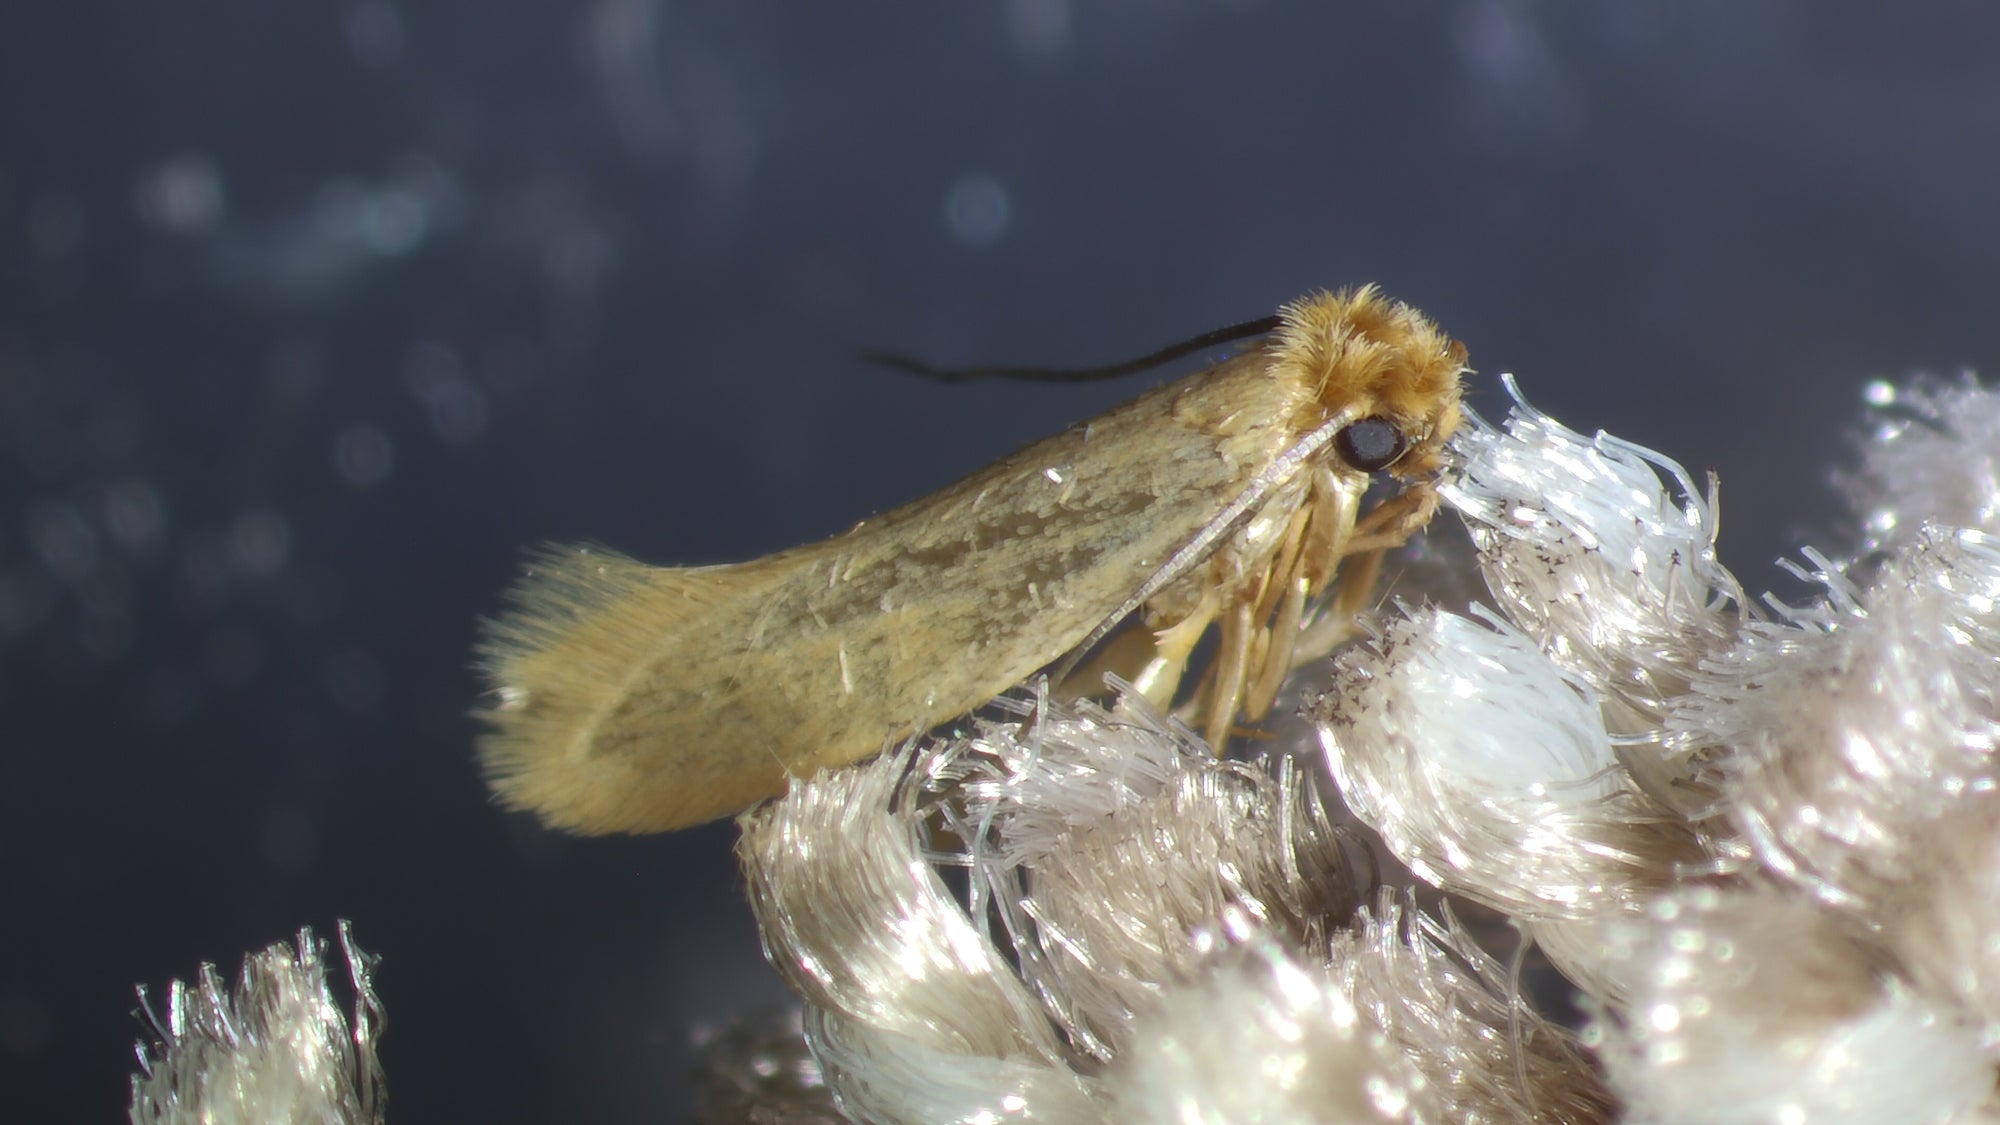 Webbing clothes moth, Tineola bisselliella.